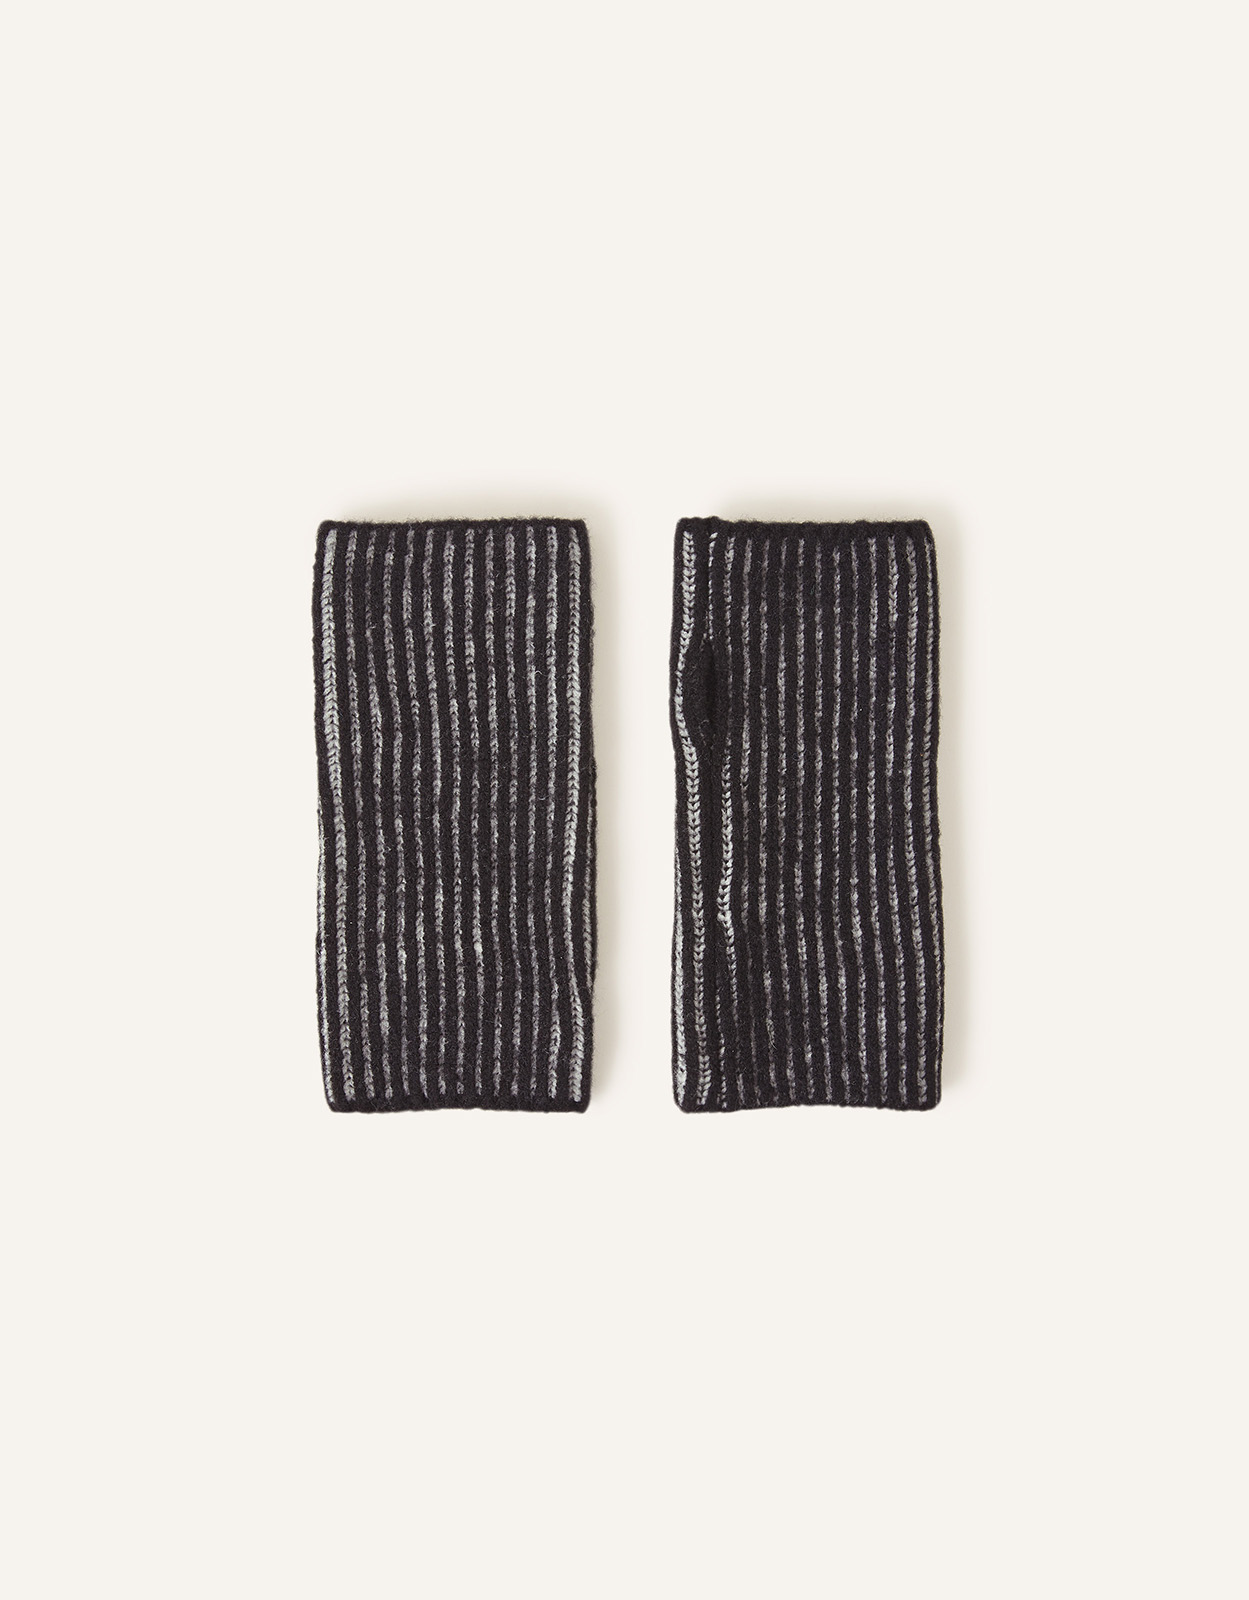 Accessorize Cut Off Gloves Black, Size: 10x21cm